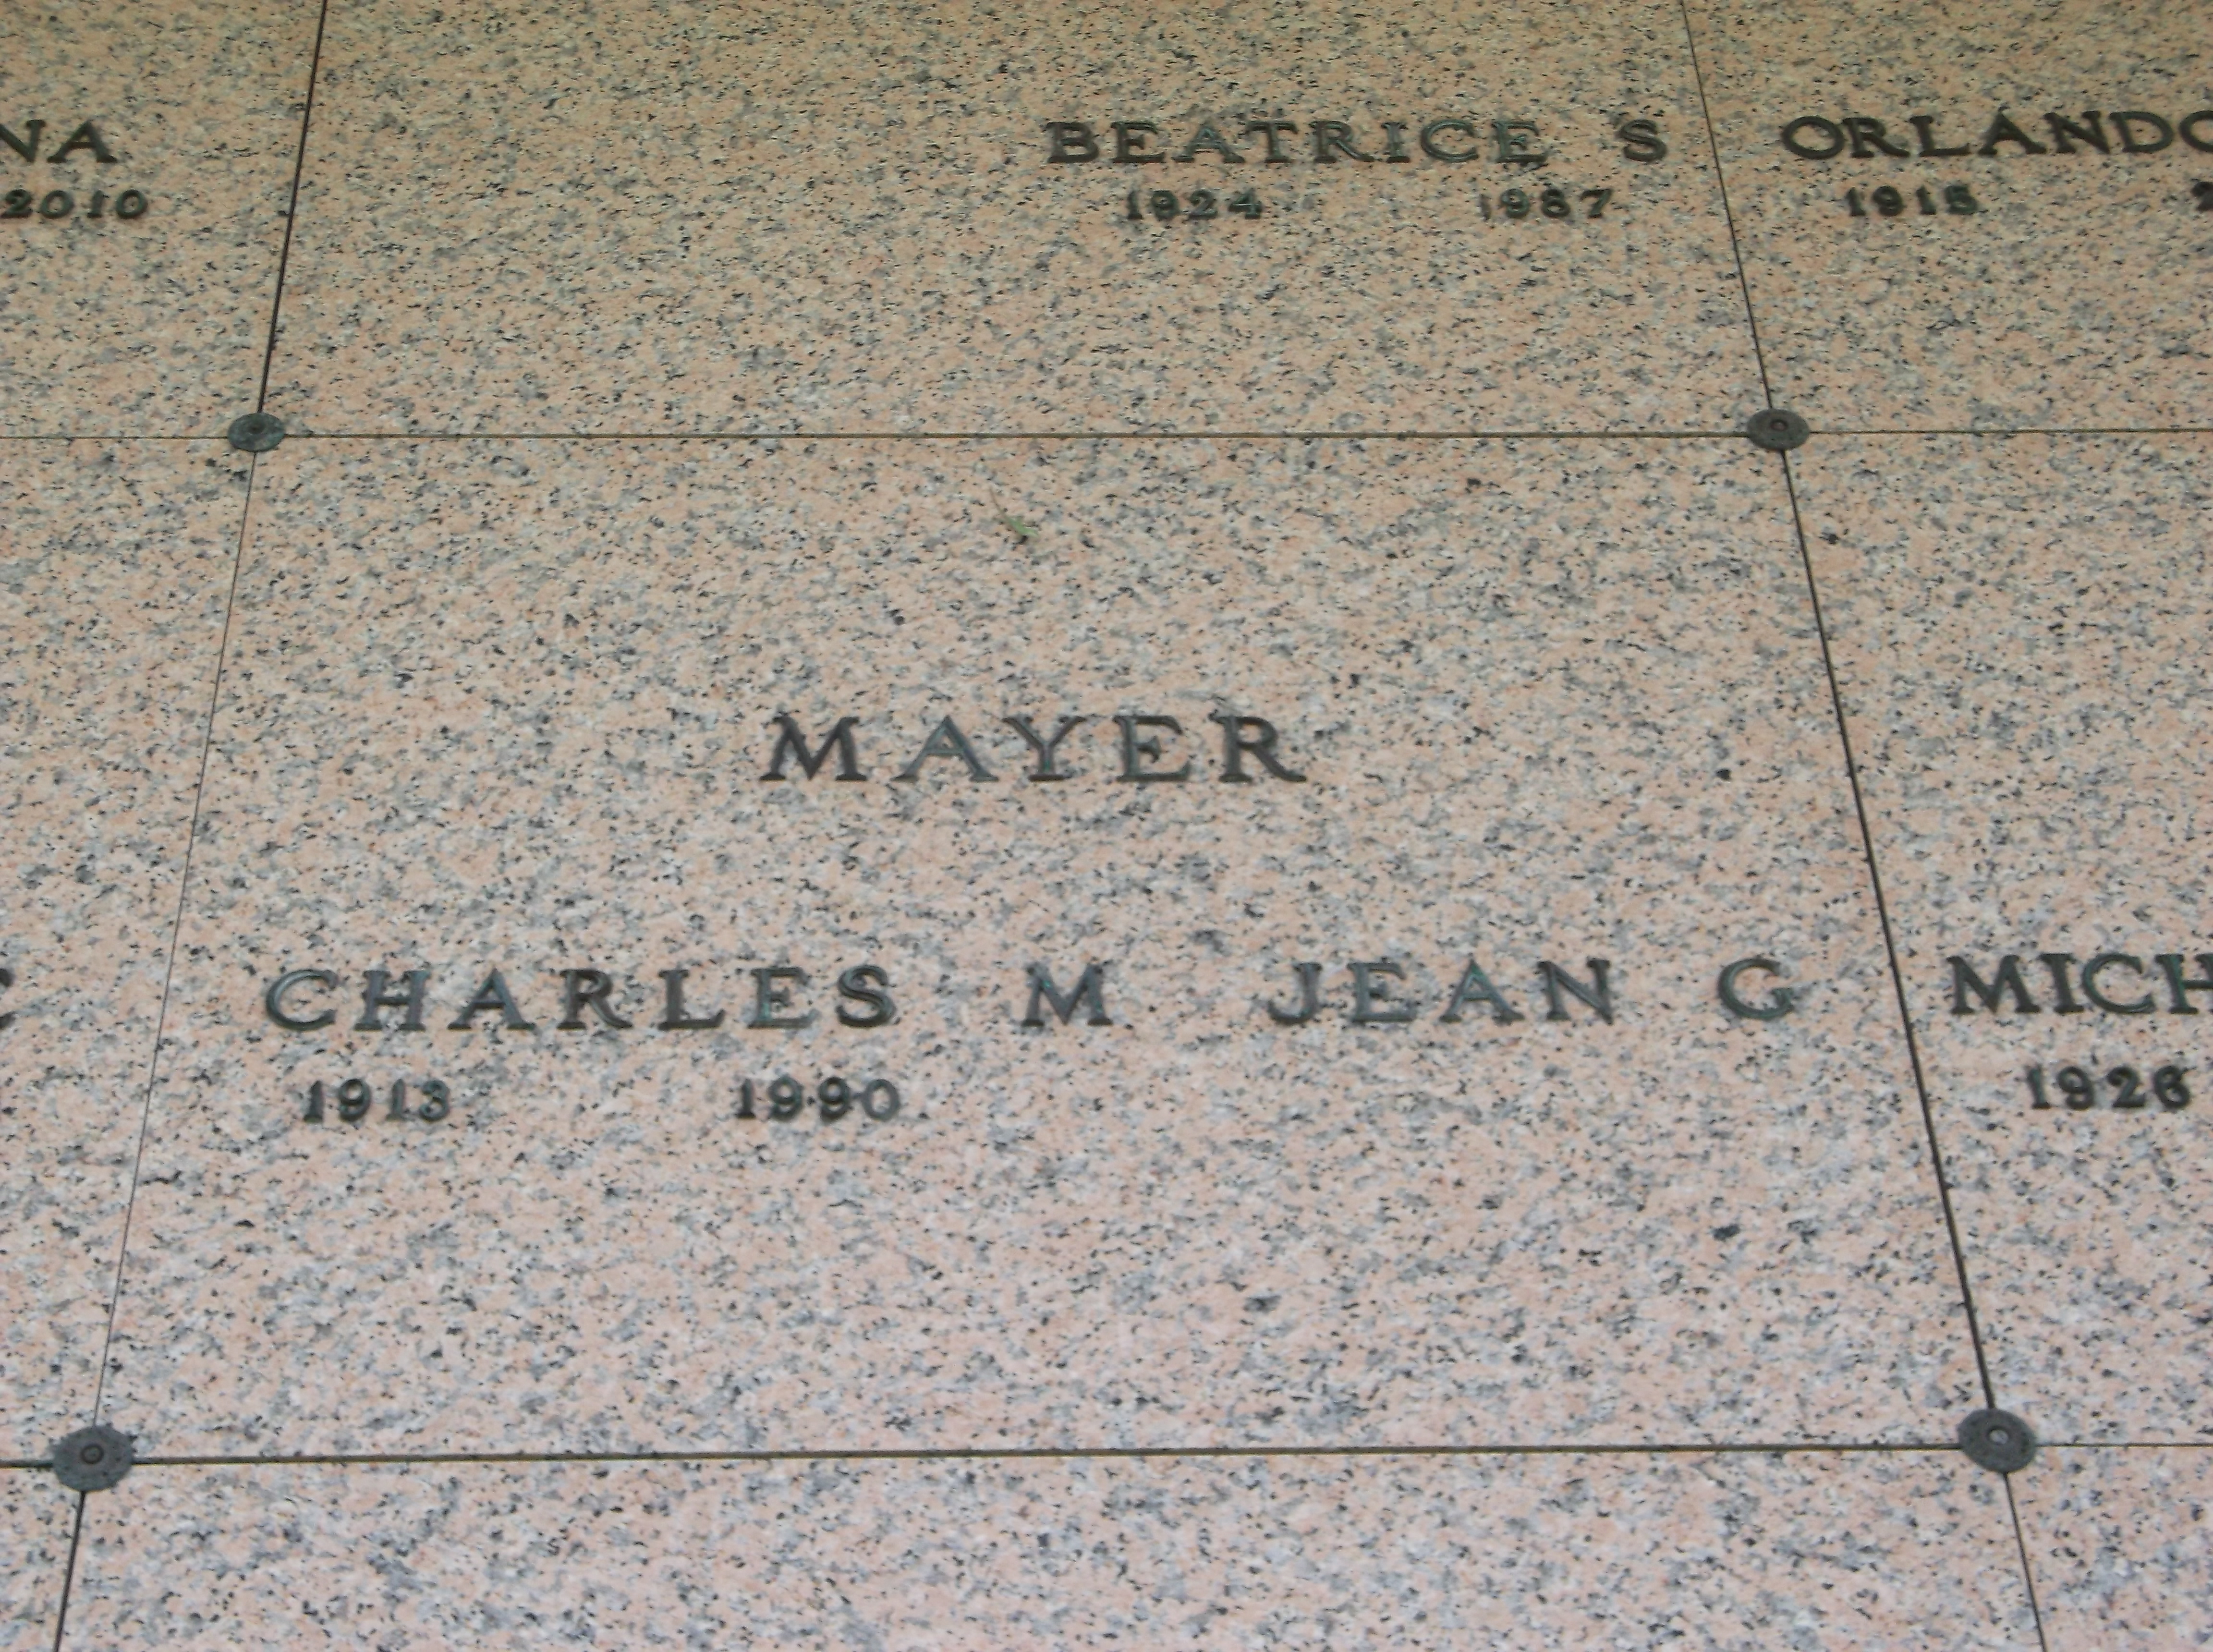 Charles M Mayer